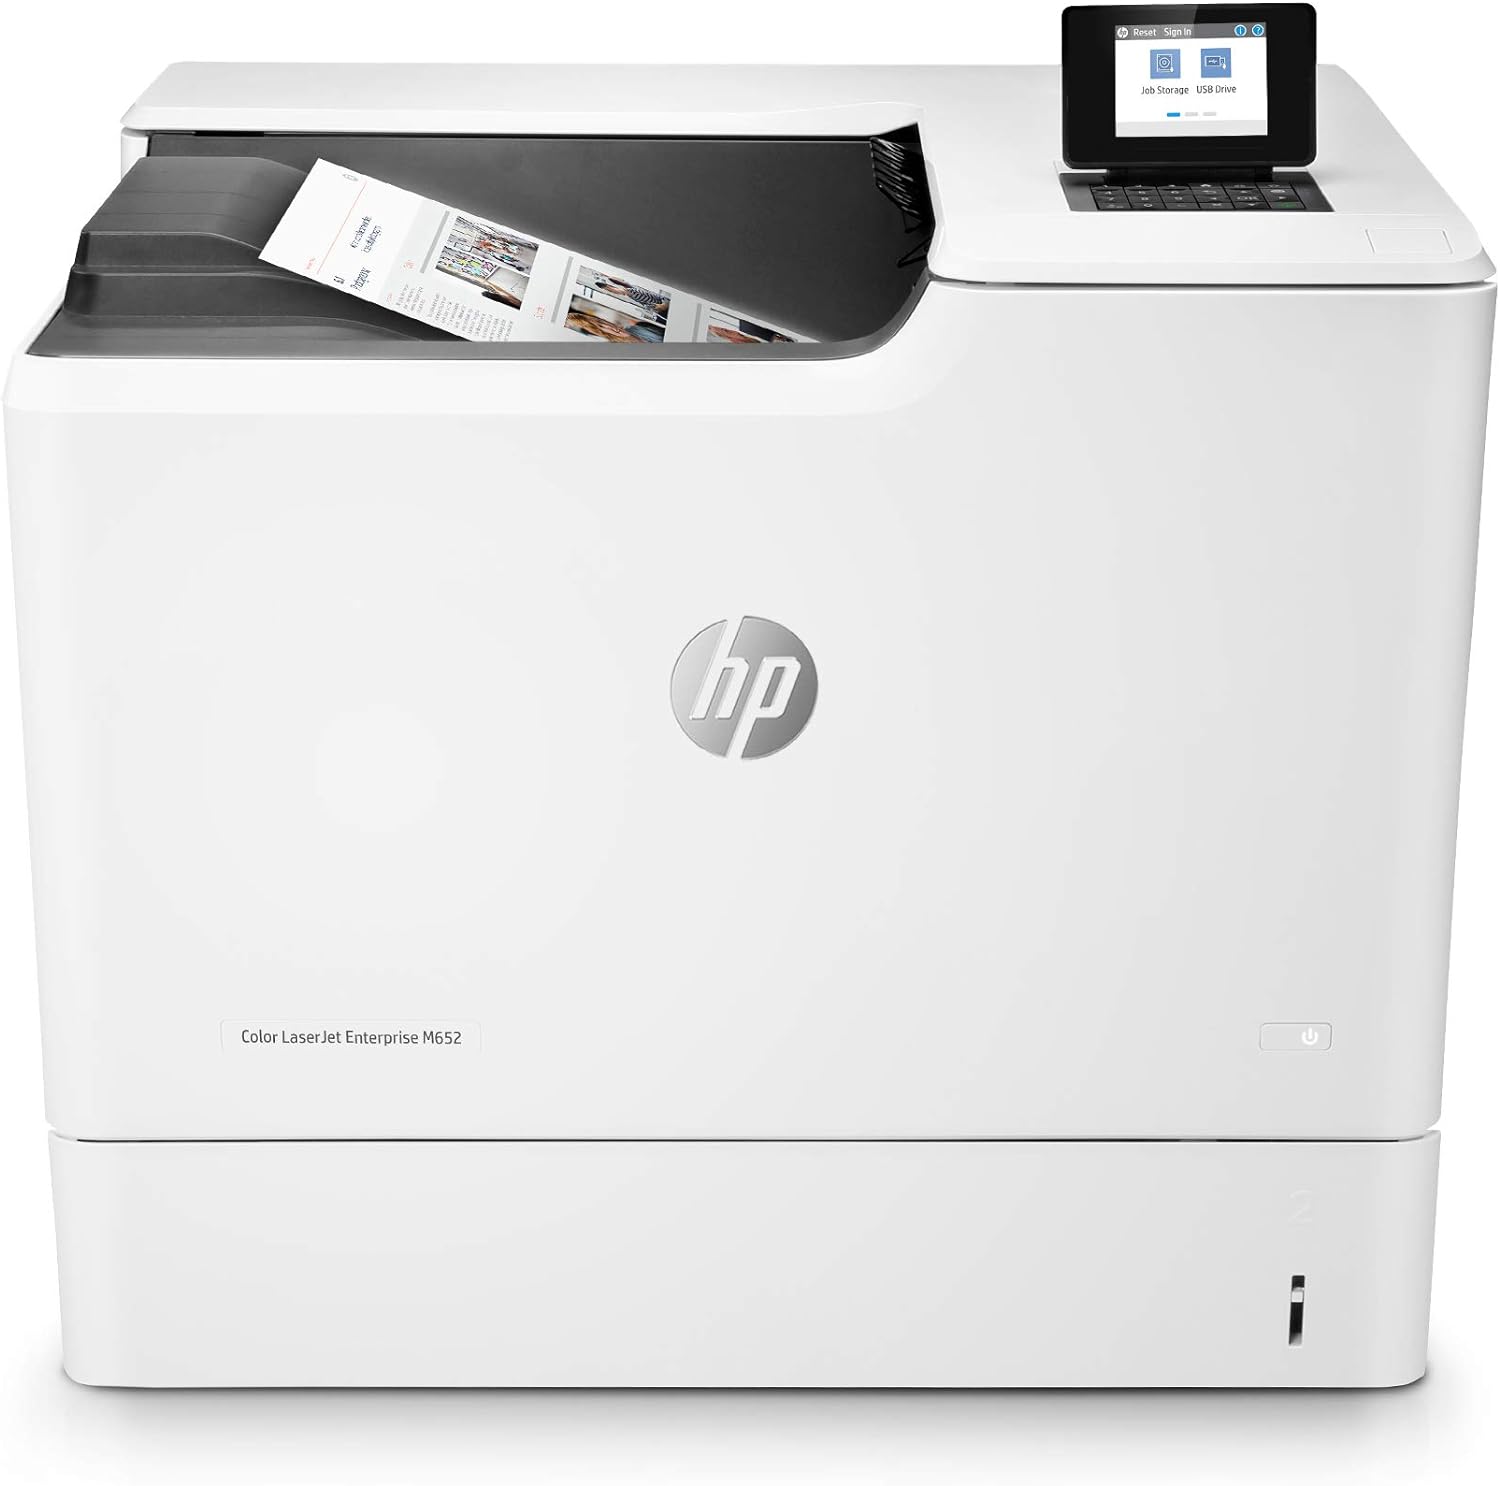 HP Impresora Color Laserjet Enterprise M652dn con impresión dúplex (J7Z99A), Color Blanco